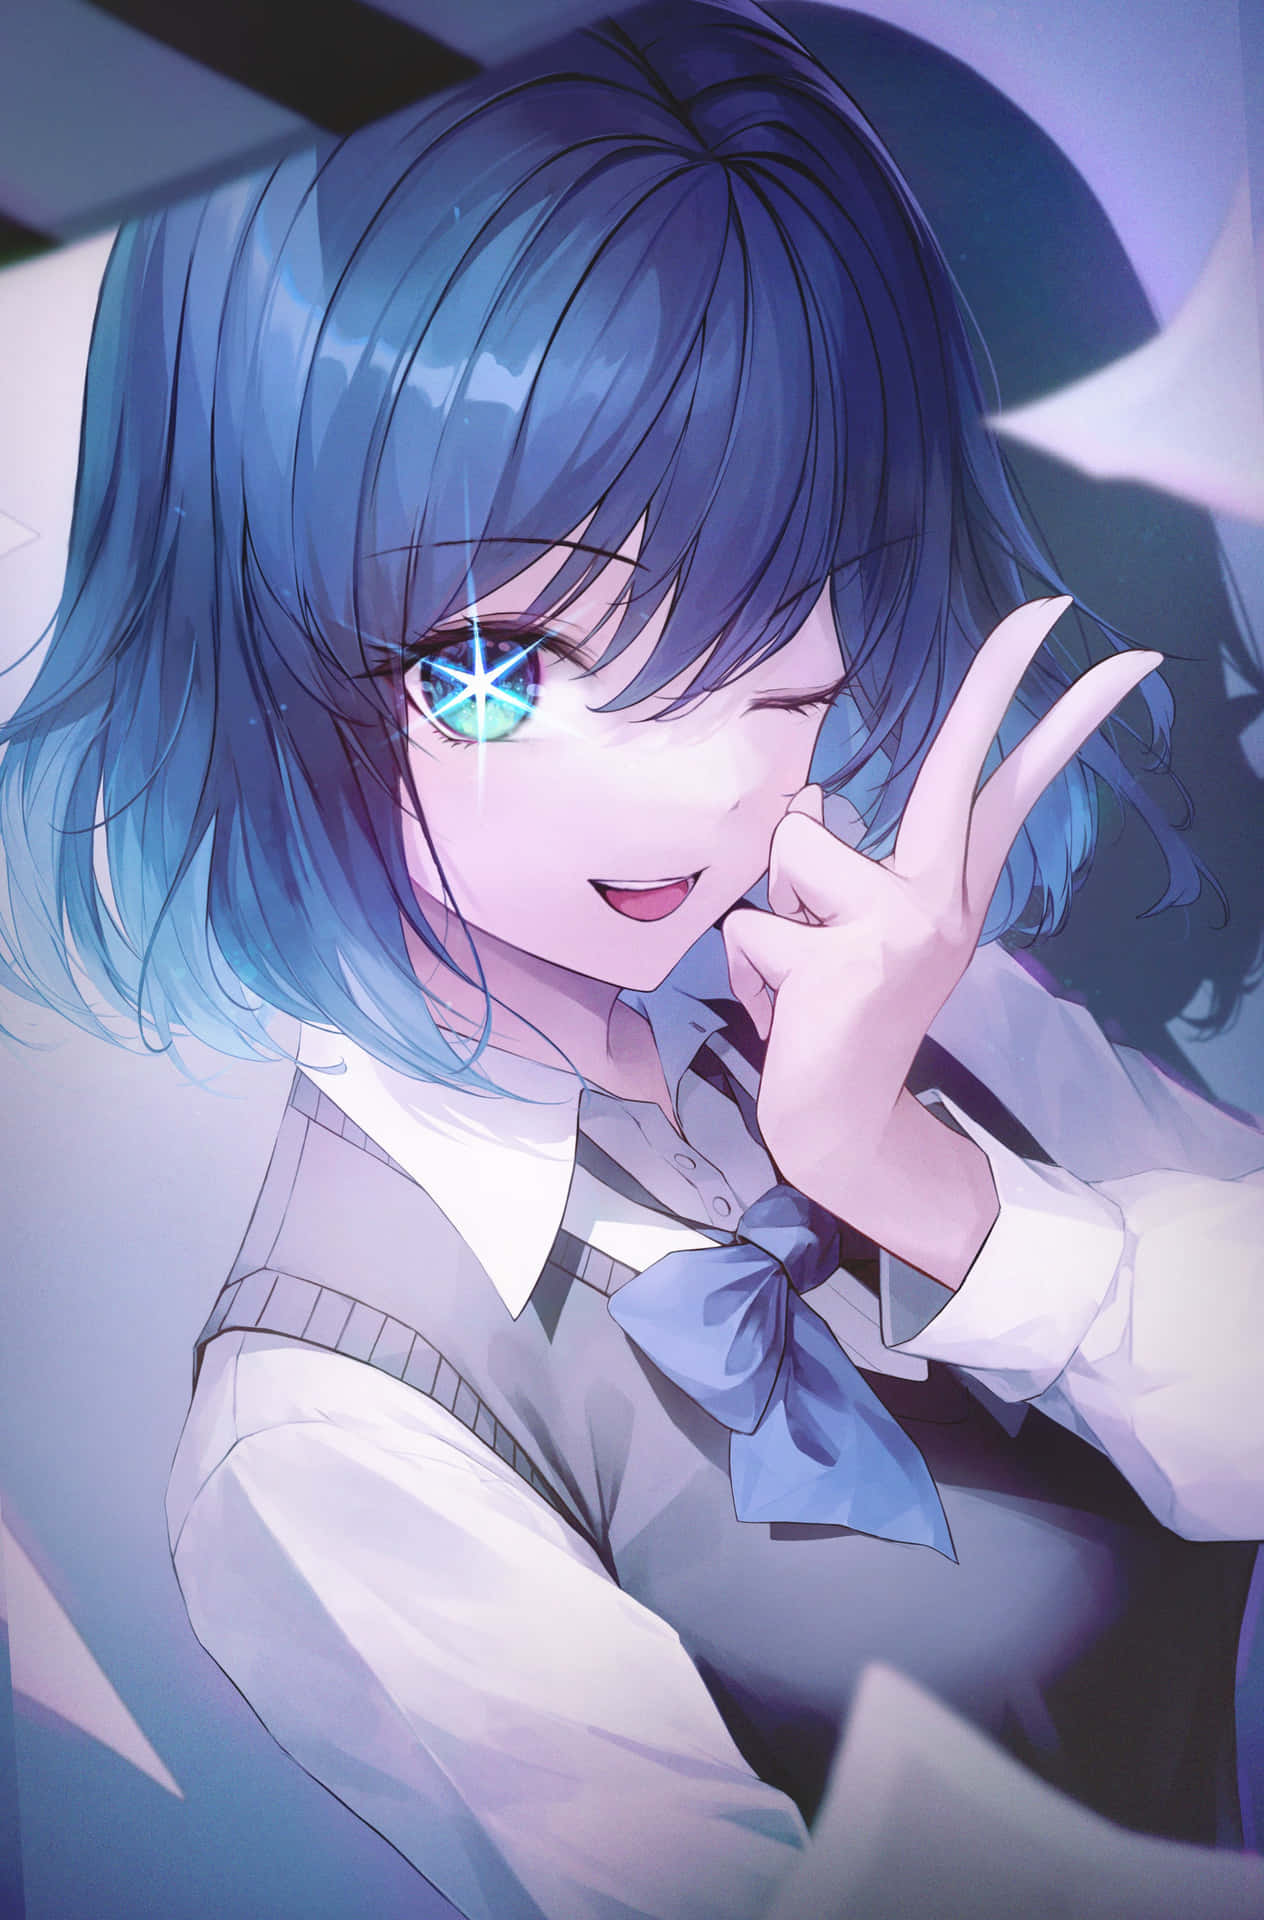 Smiling Anime Girlwith Sparkling Eyes Wallpaper